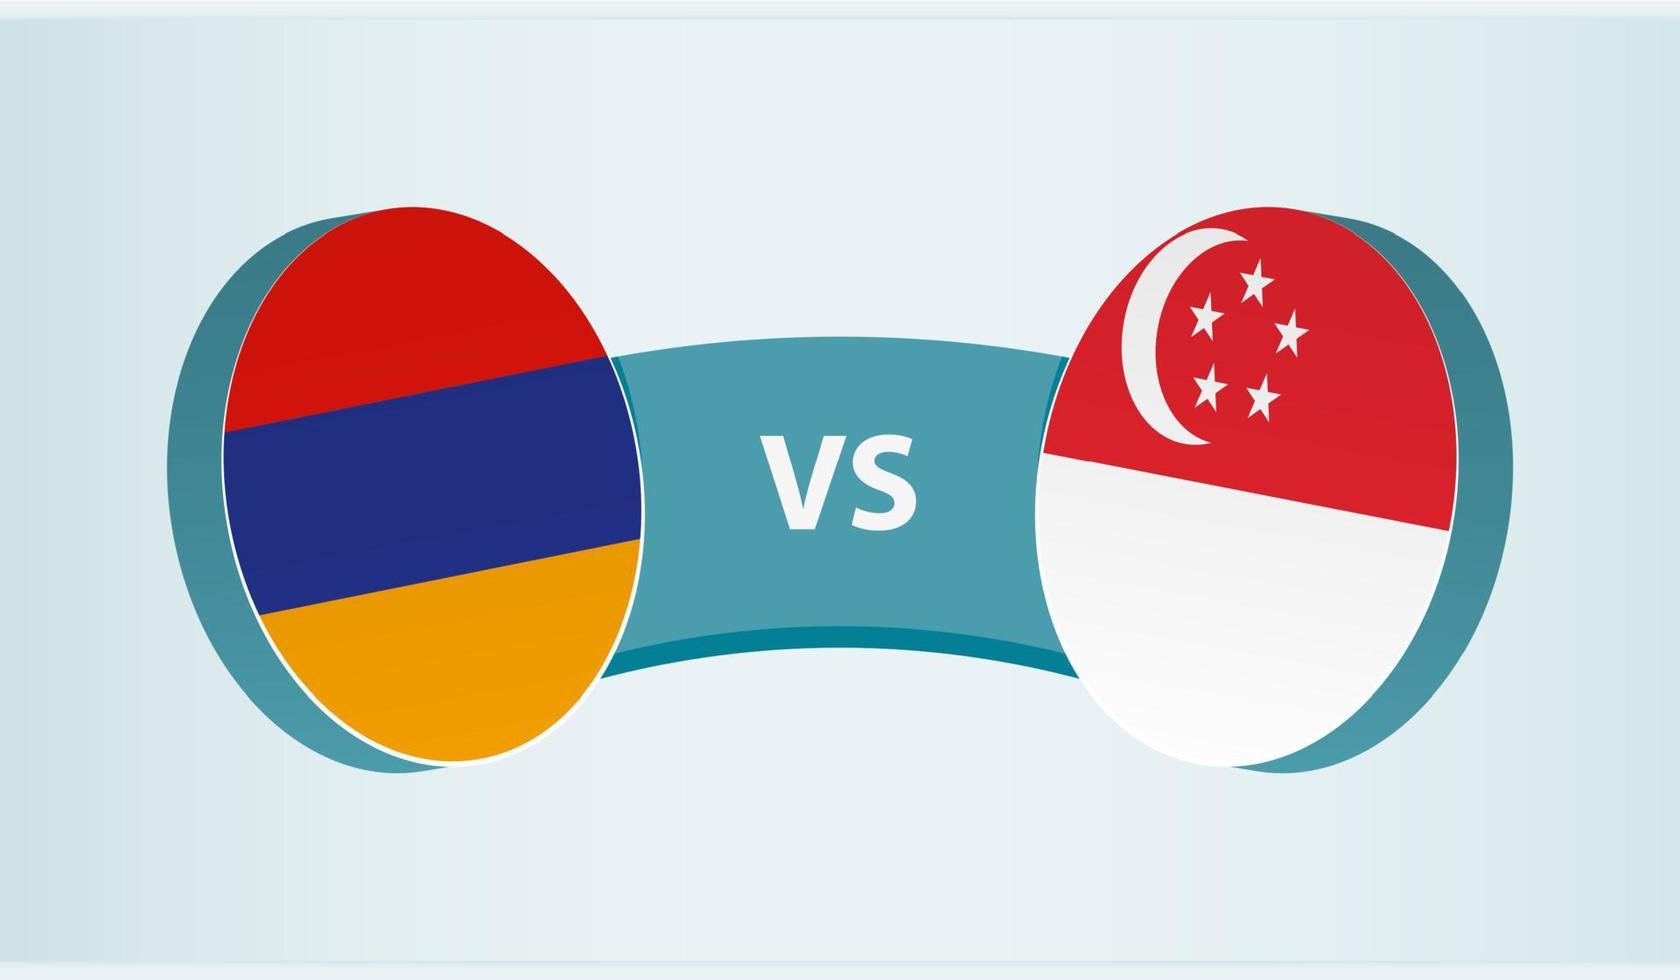 Armenia versus Singapore, team sports competition concept. vector